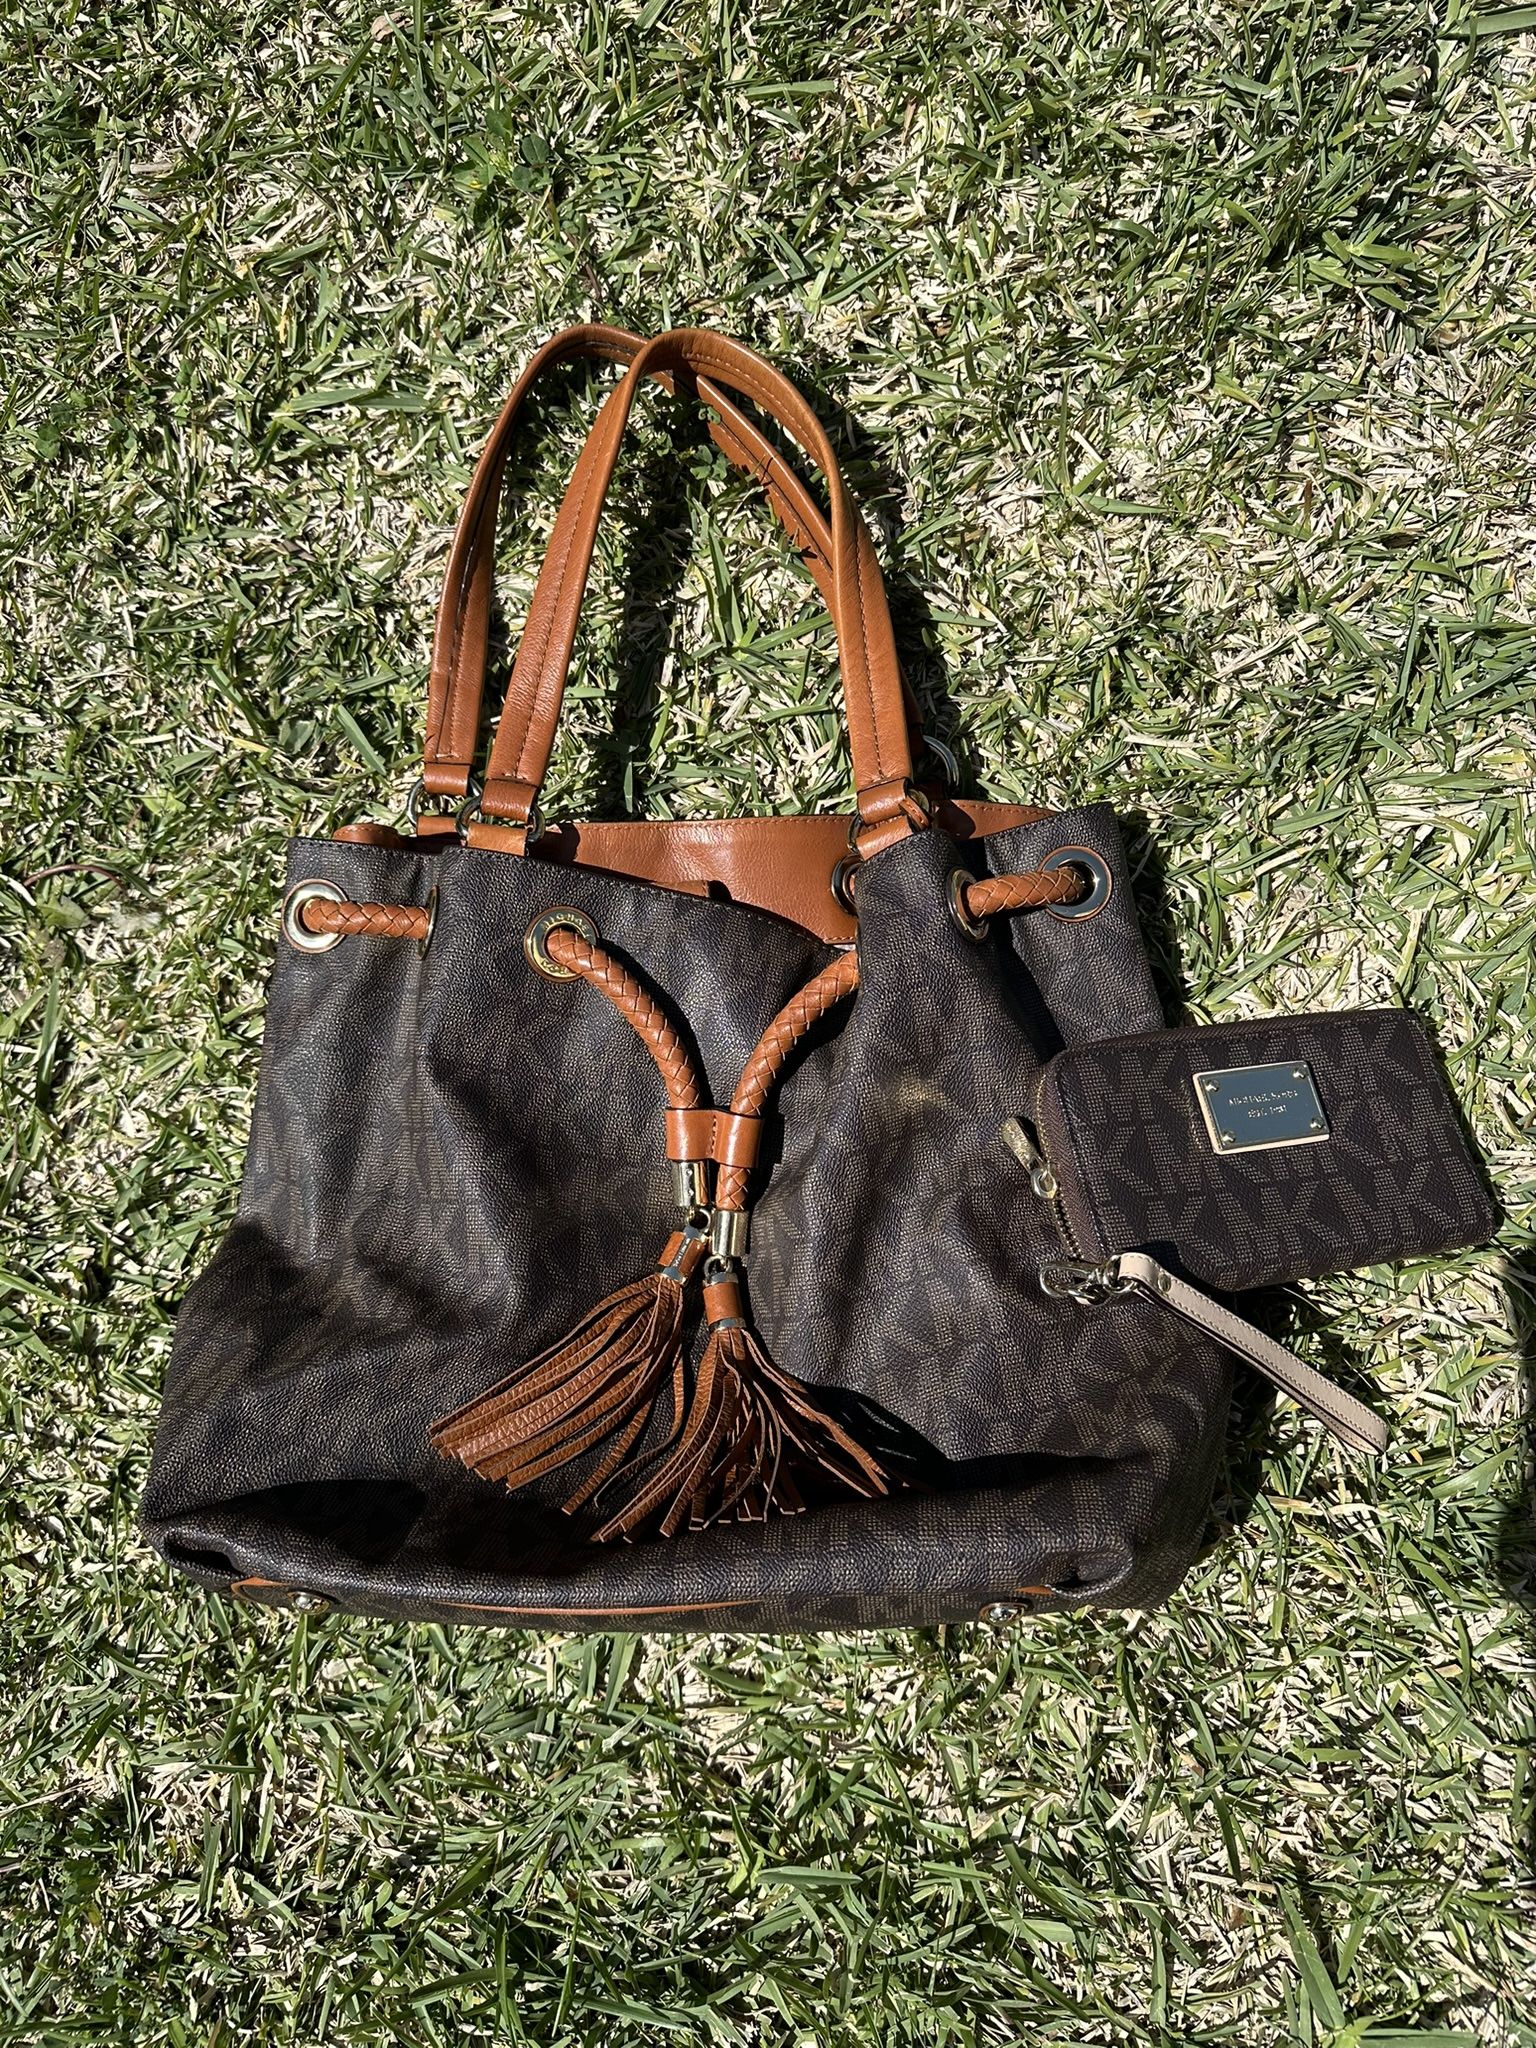 Michael Kors Handbag And Wallet